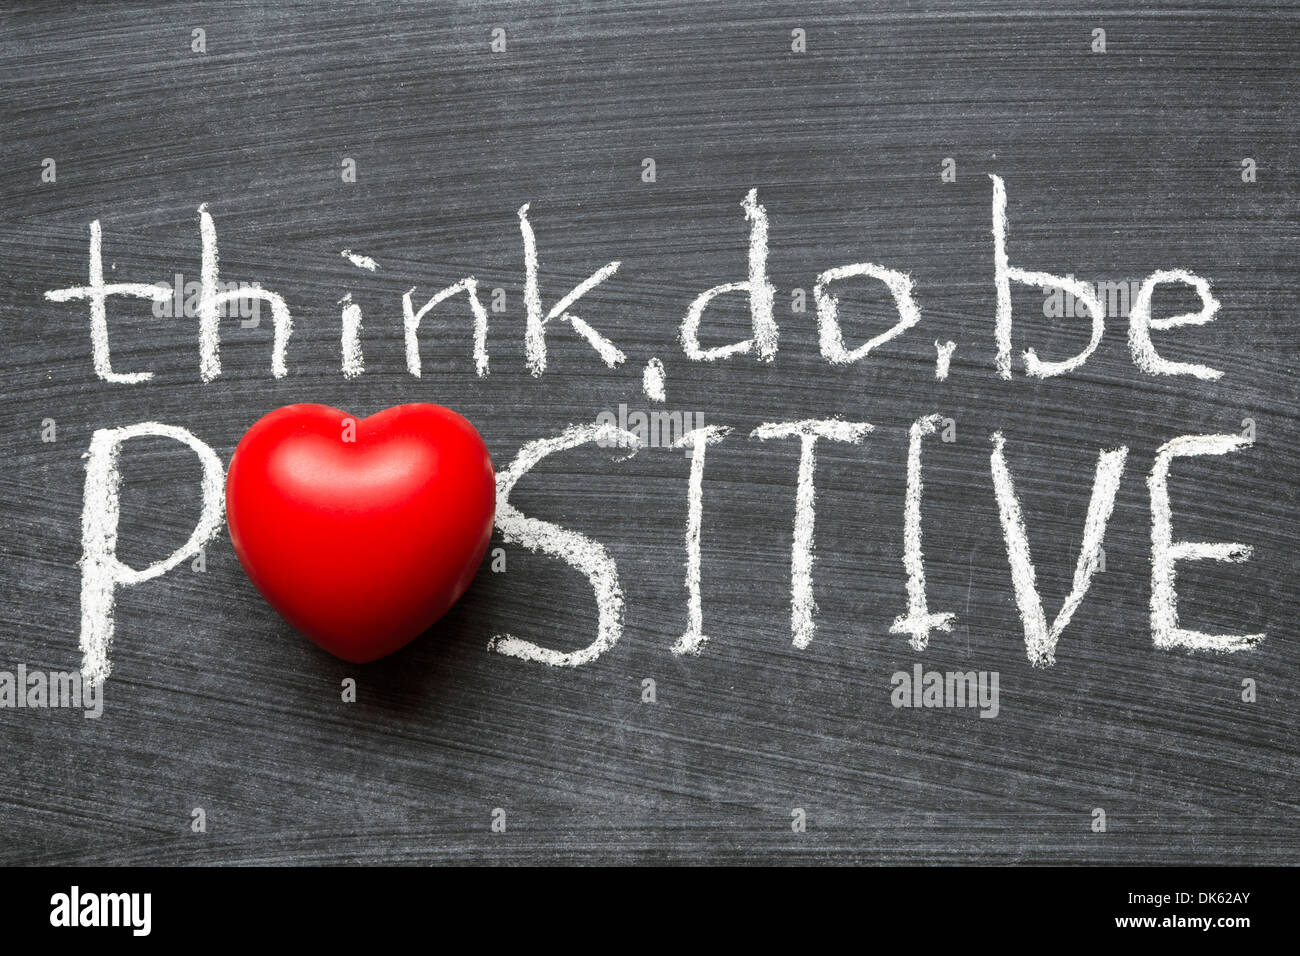 think, do, be positive concept handwritten on black chalkboard Stock Photo